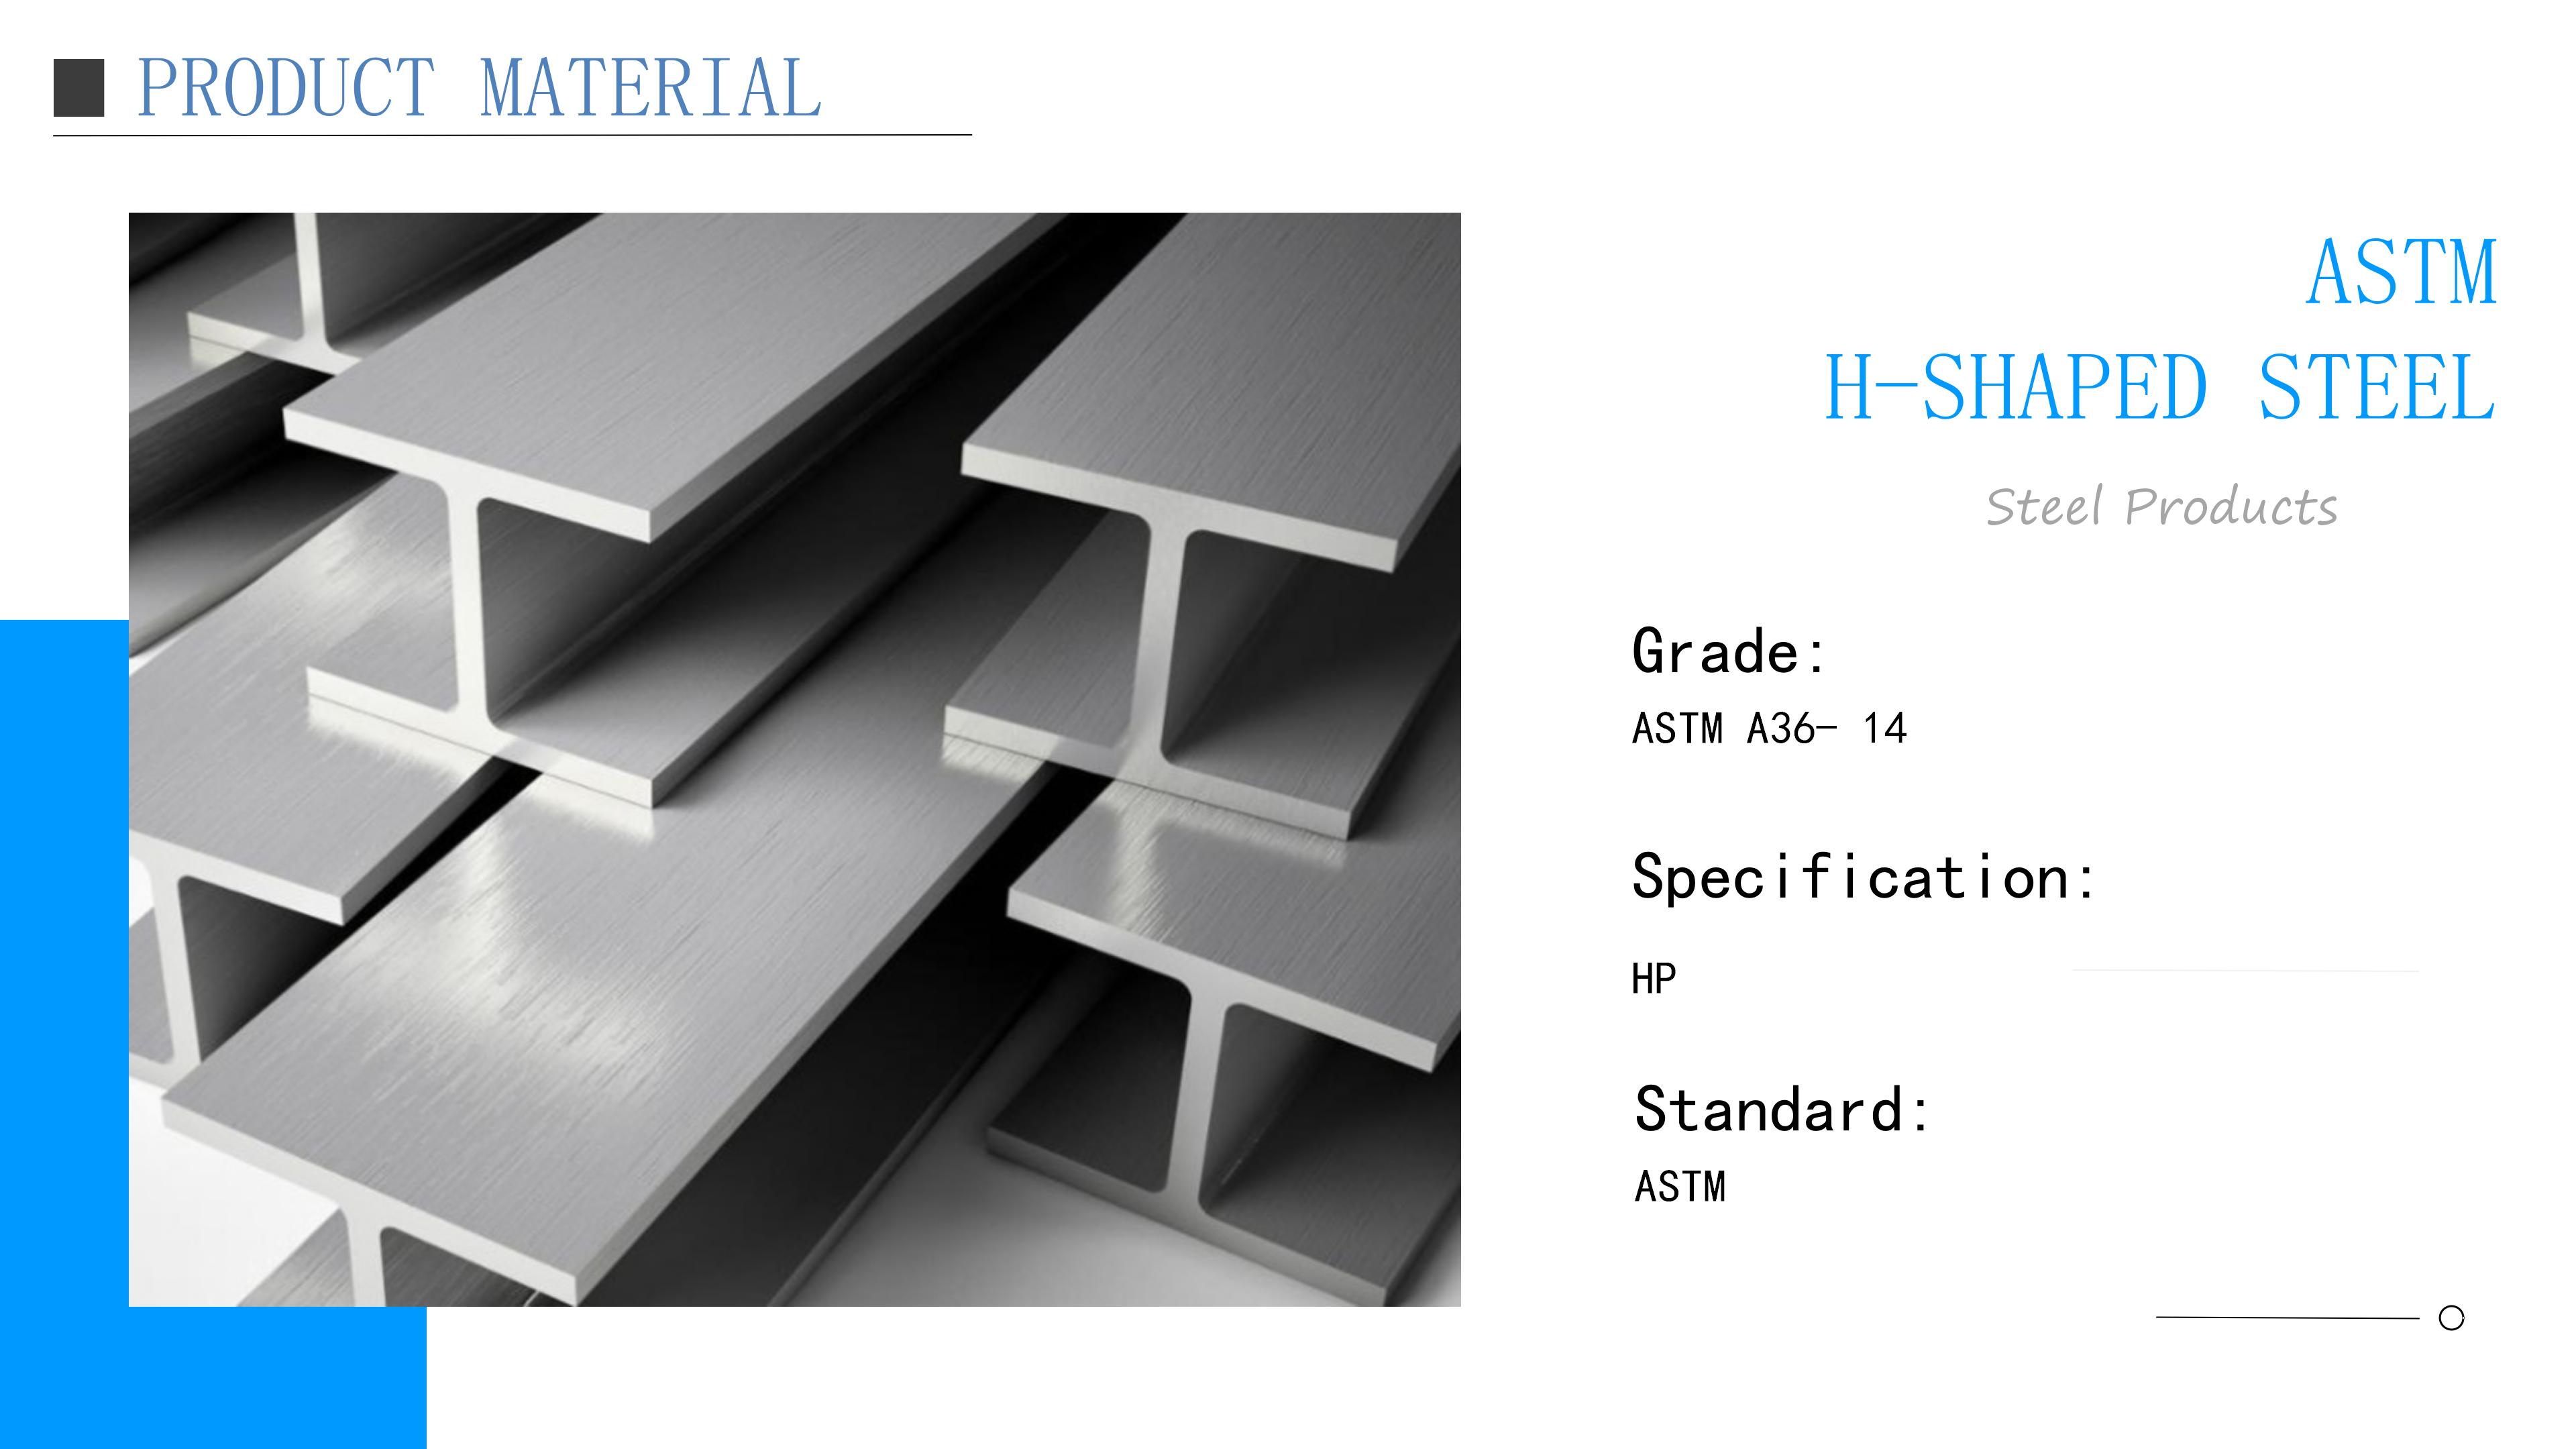 ASTM H-Shaped Steel (3)